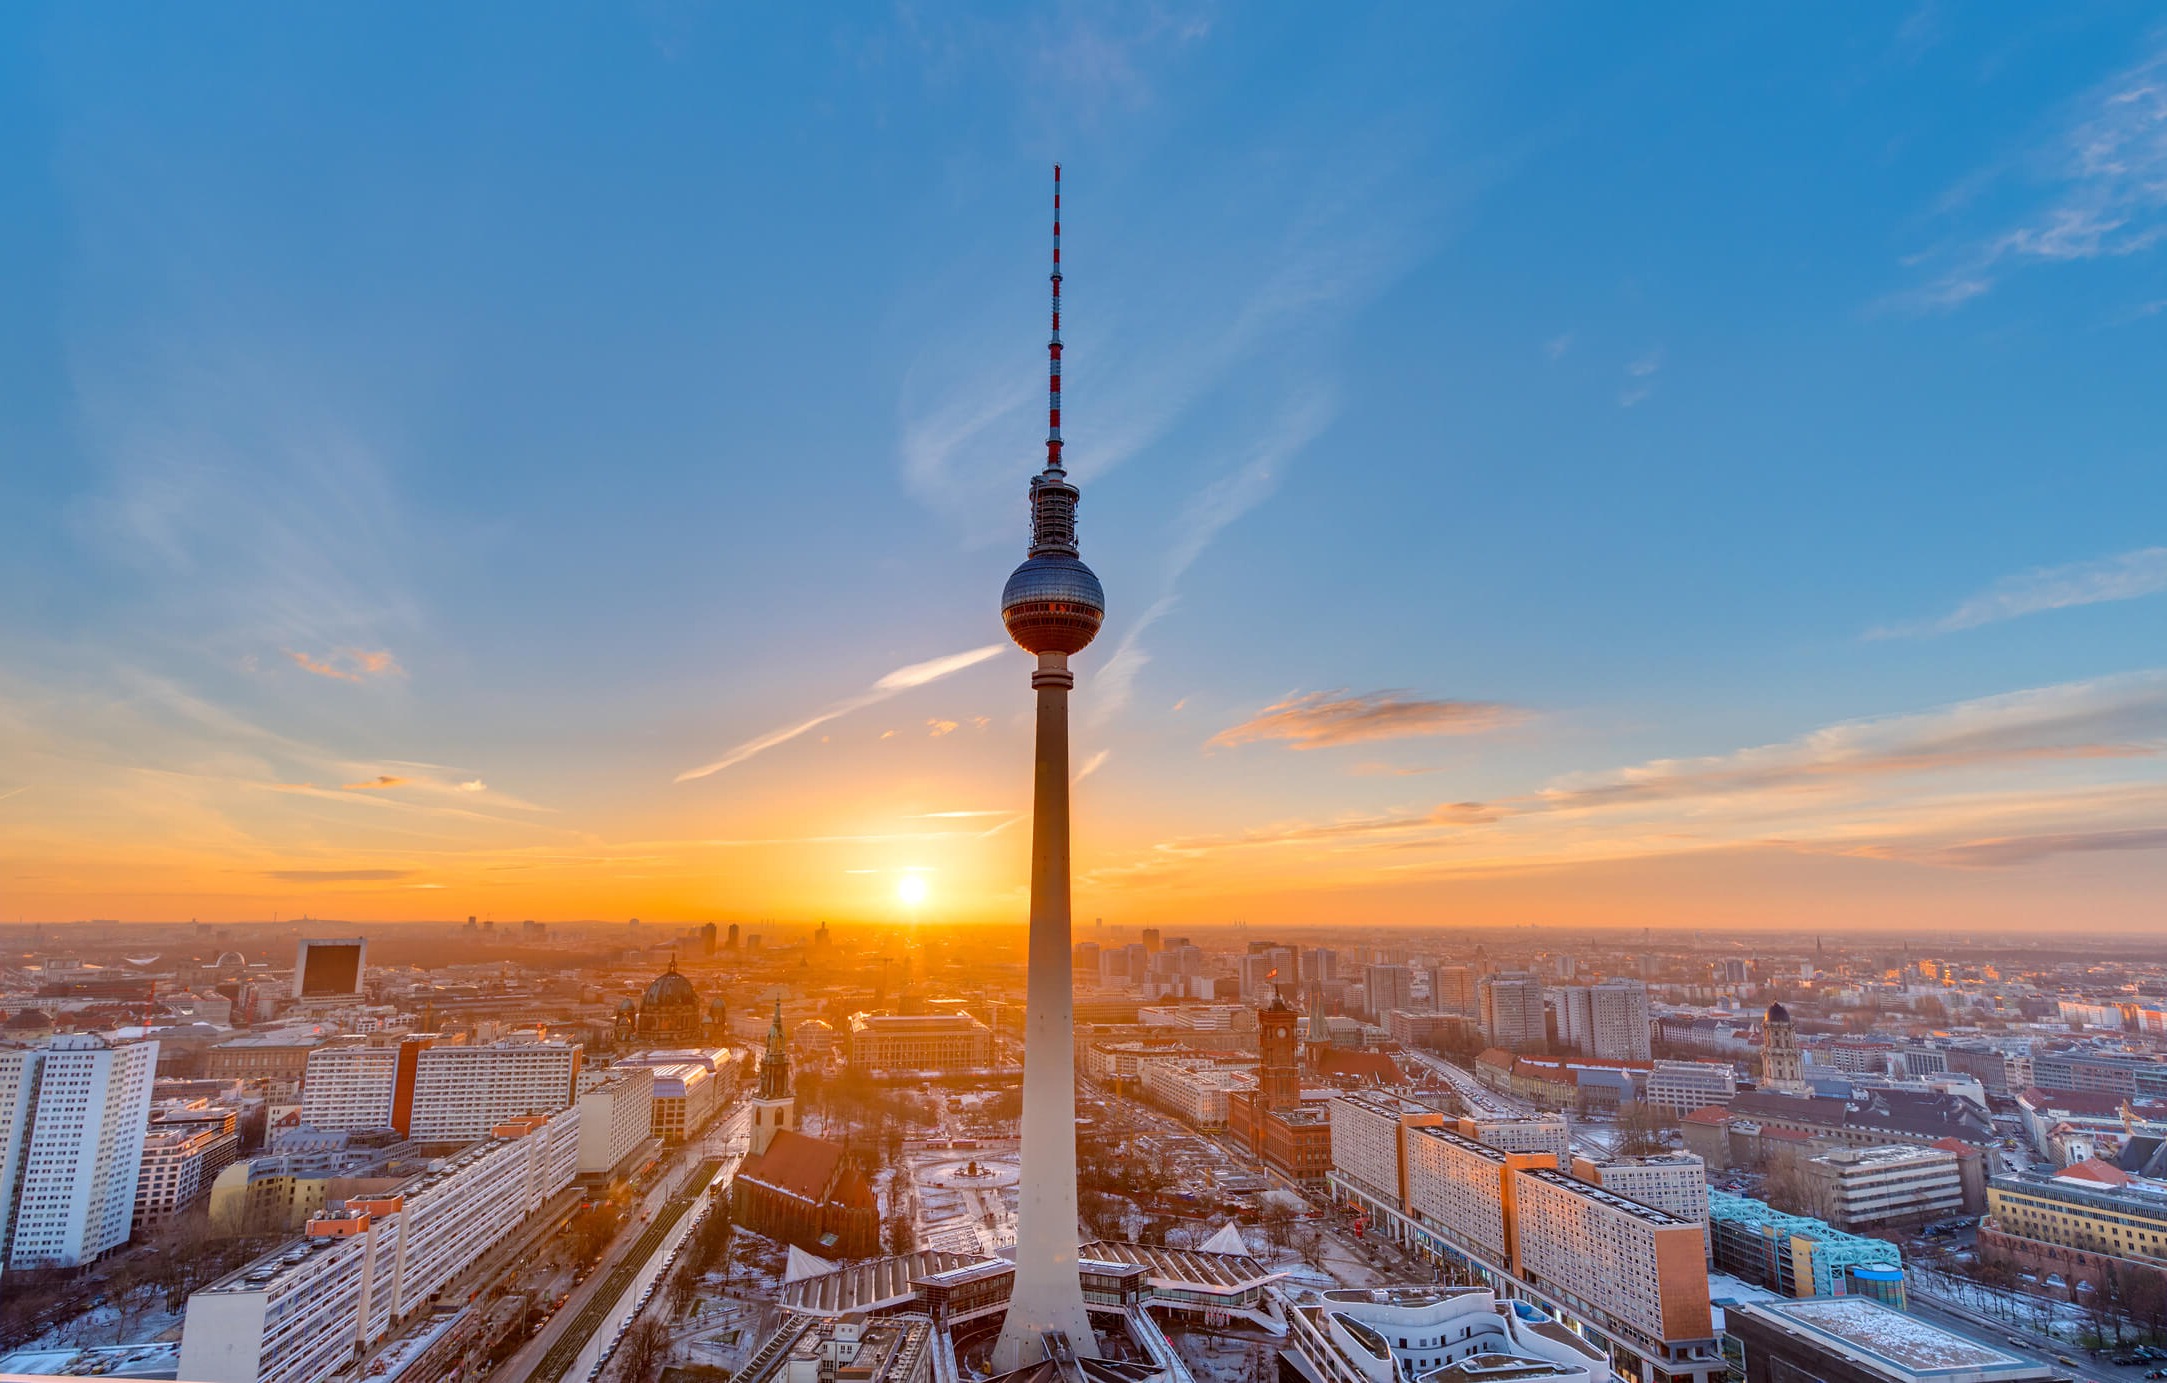 BEATBRDG Music Industry Internships - Looking out over the Berlin skyline